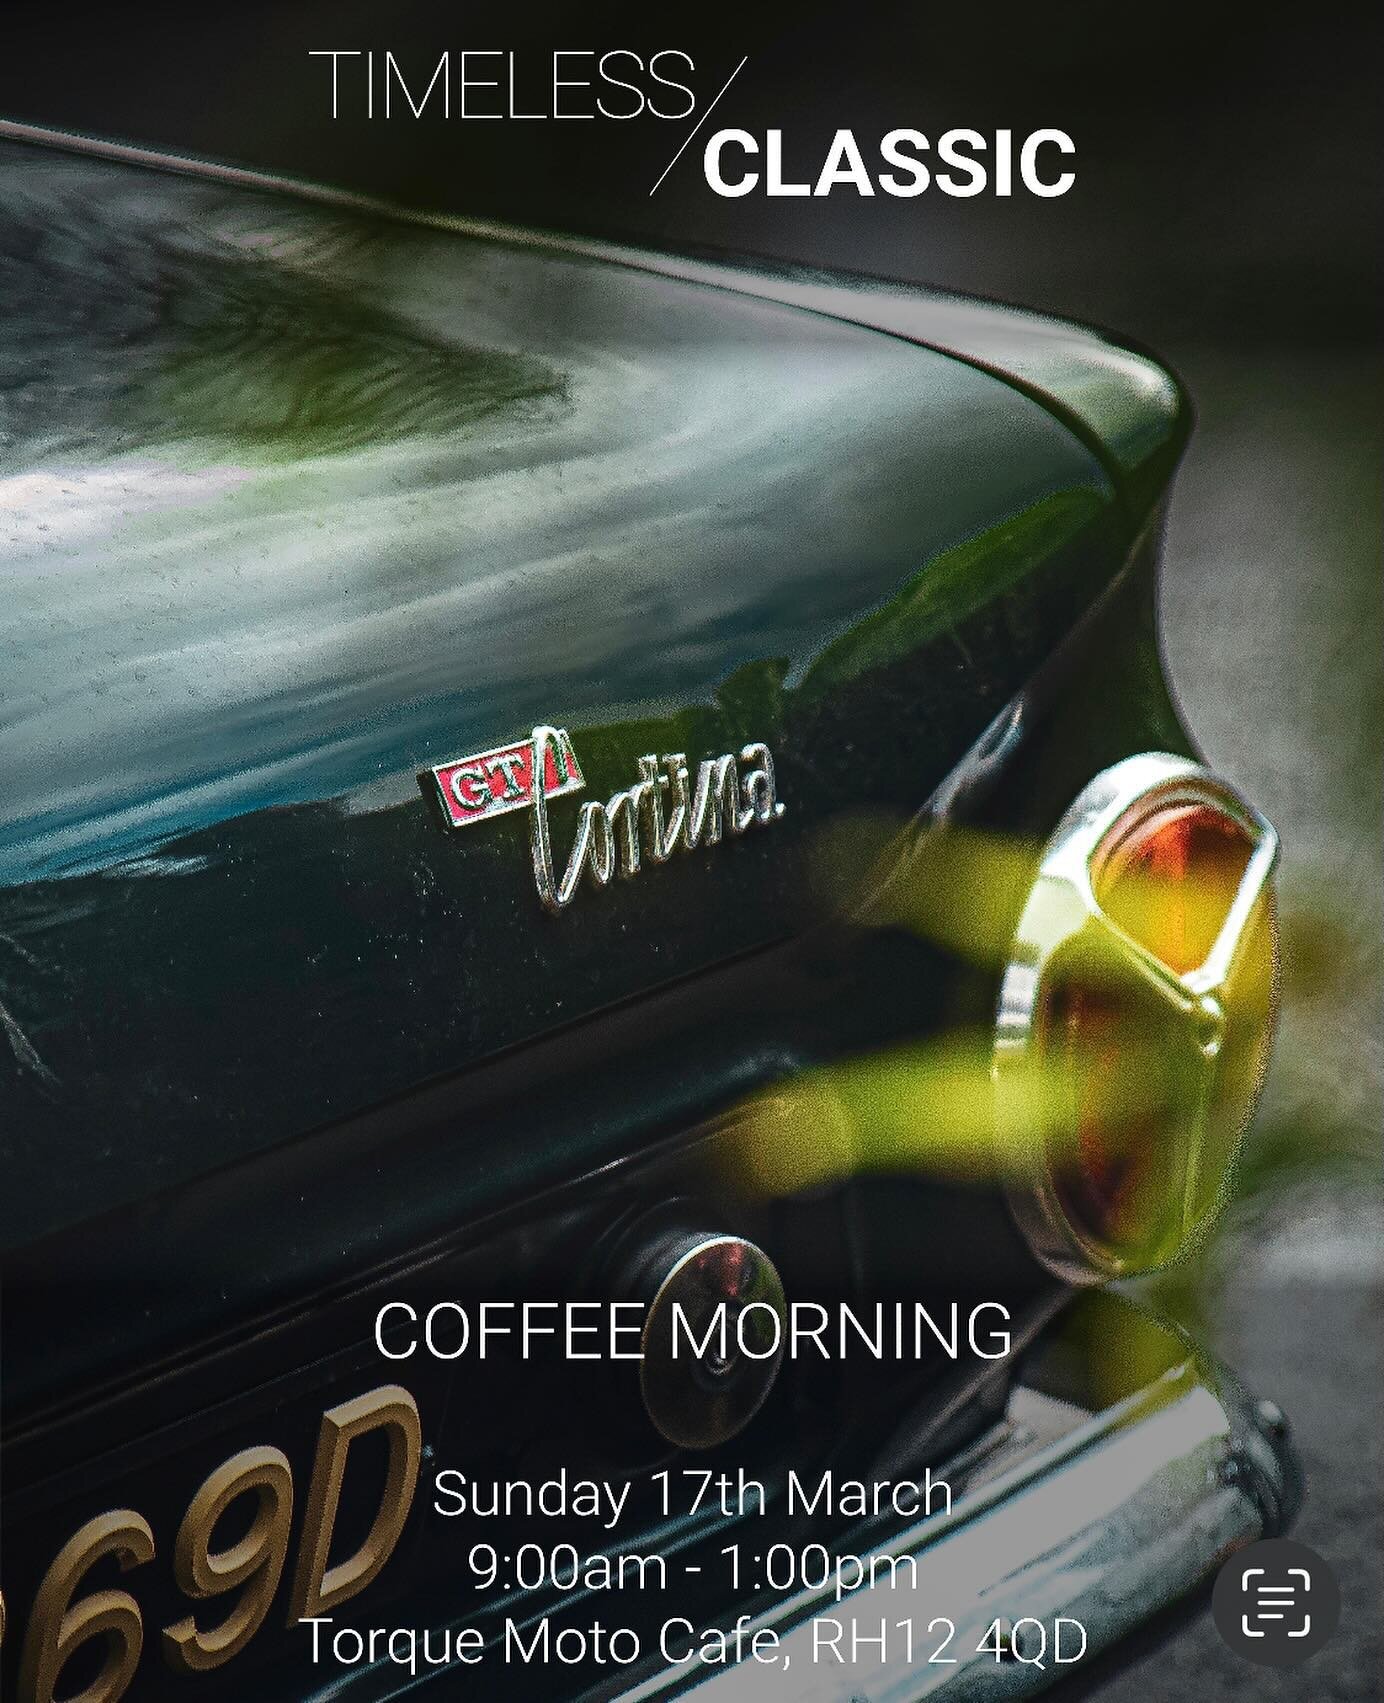 Classics this Sunday #classiccars